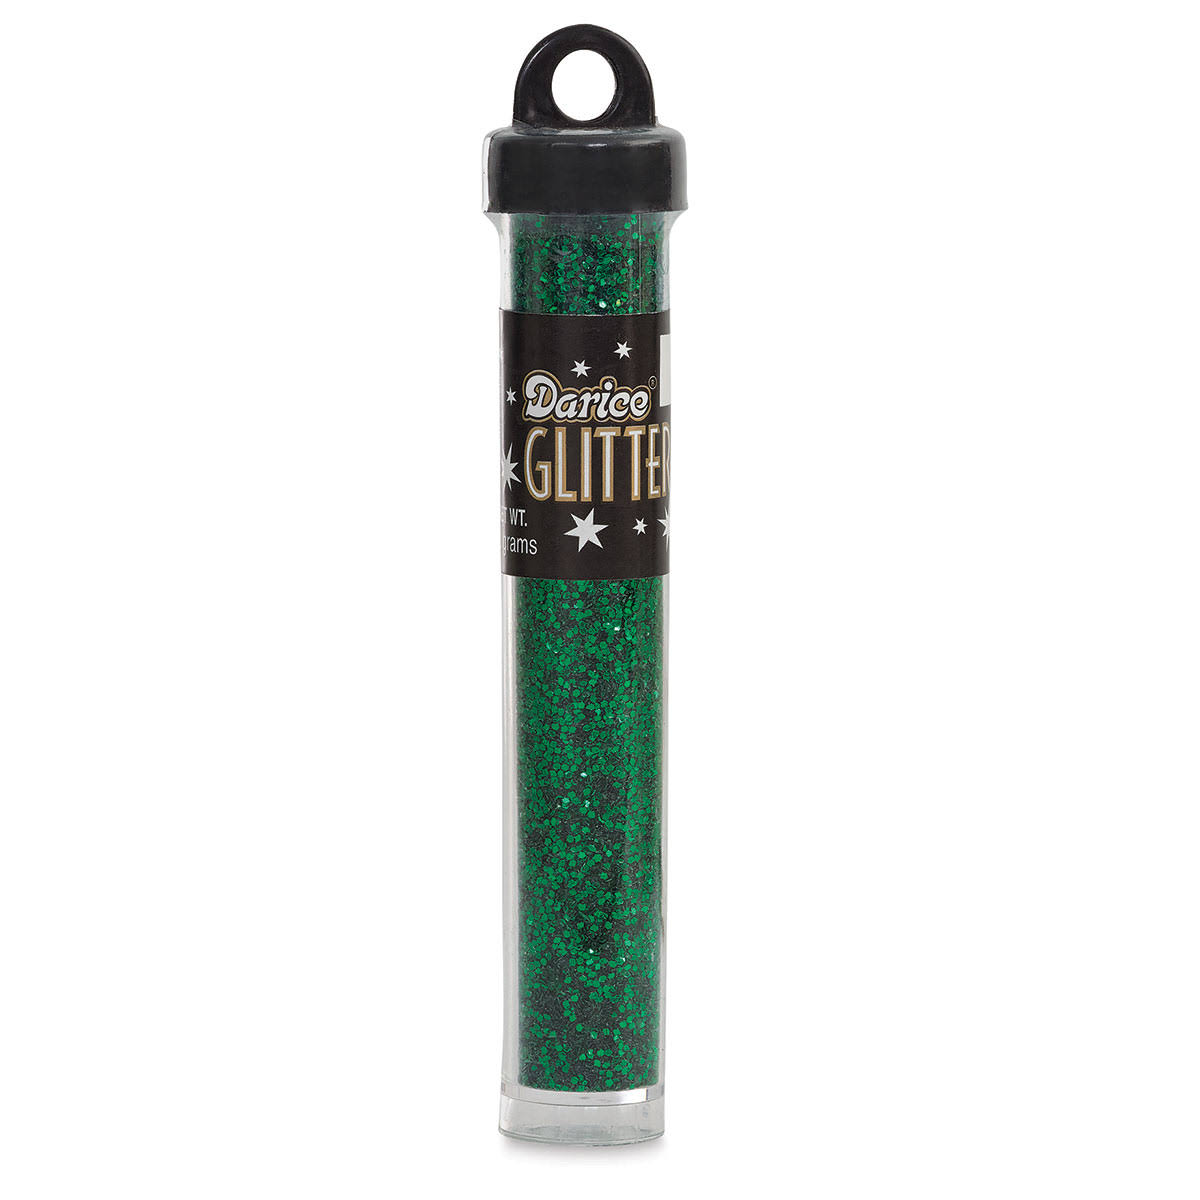 Darice Glitter Tube - 3/4oz, Green